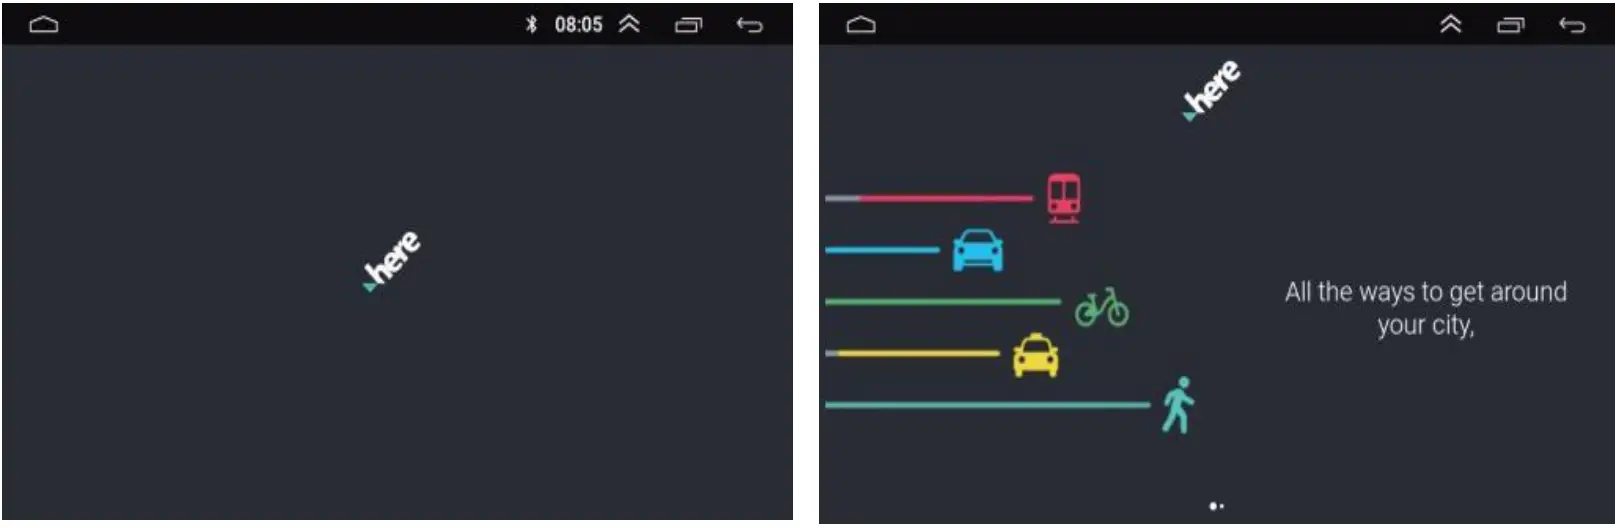 CAMECHO SHA16 Car Play Android Auto - menu